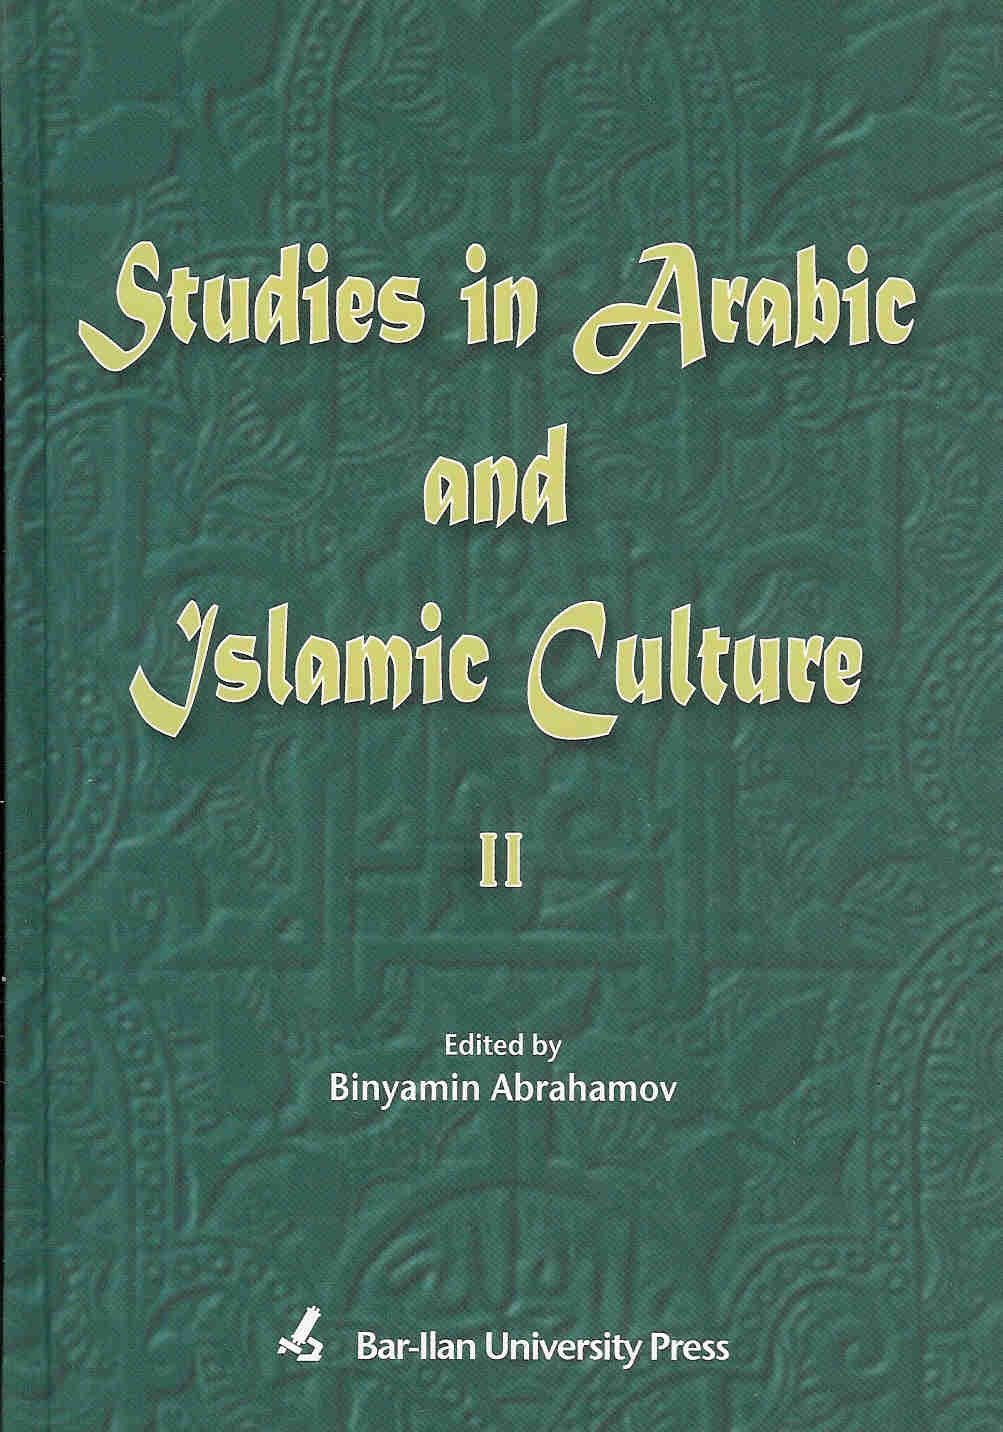 Studies in Arabic and Islamic Culture II